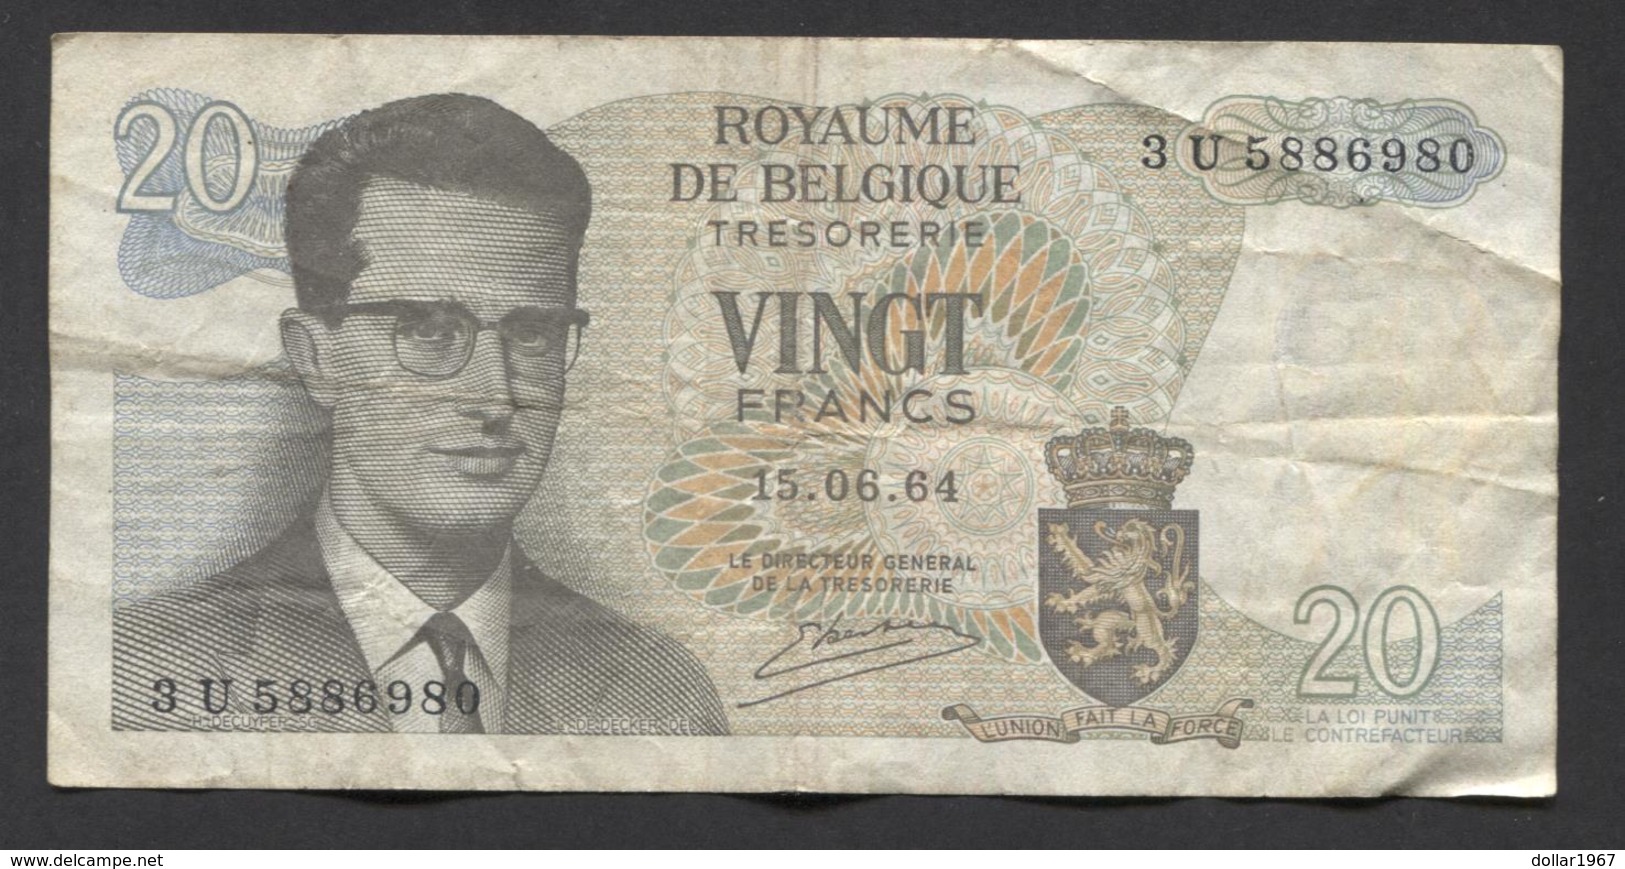 België Belgique Belgium 15 06 1964 -  20 Francs Atomium Baudouin. 3 U 5886980 - 20 Francs